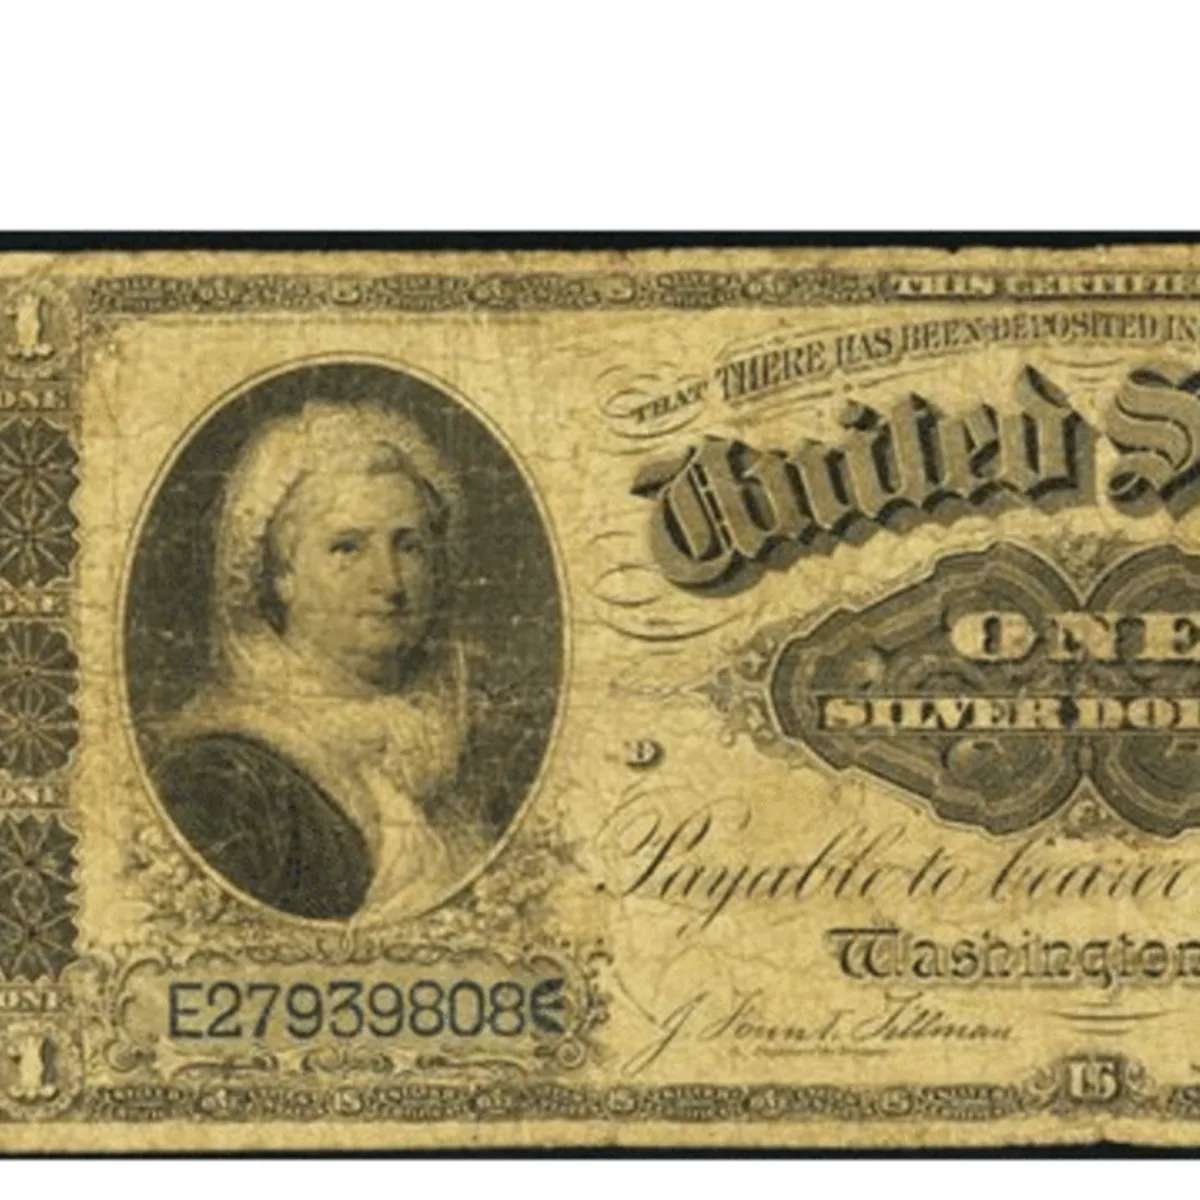 The Singular Honor: Martha Washington on U.S. Currency